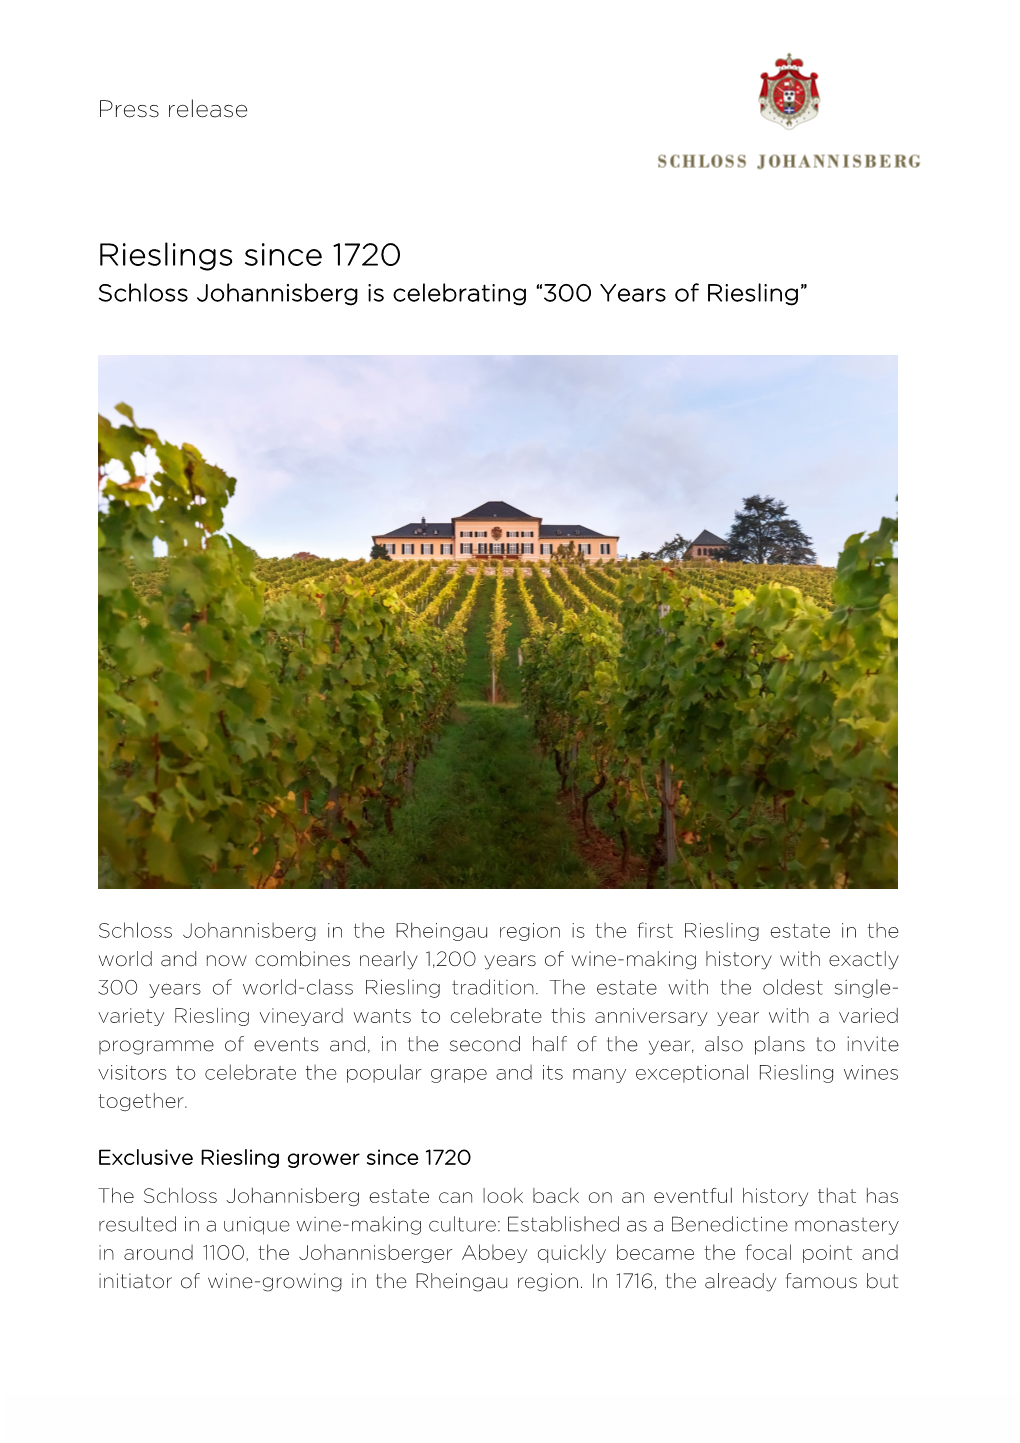 Rieslings Since 1720 Schloss Johannisberg Is Celebrating “300 Years of Riesling”